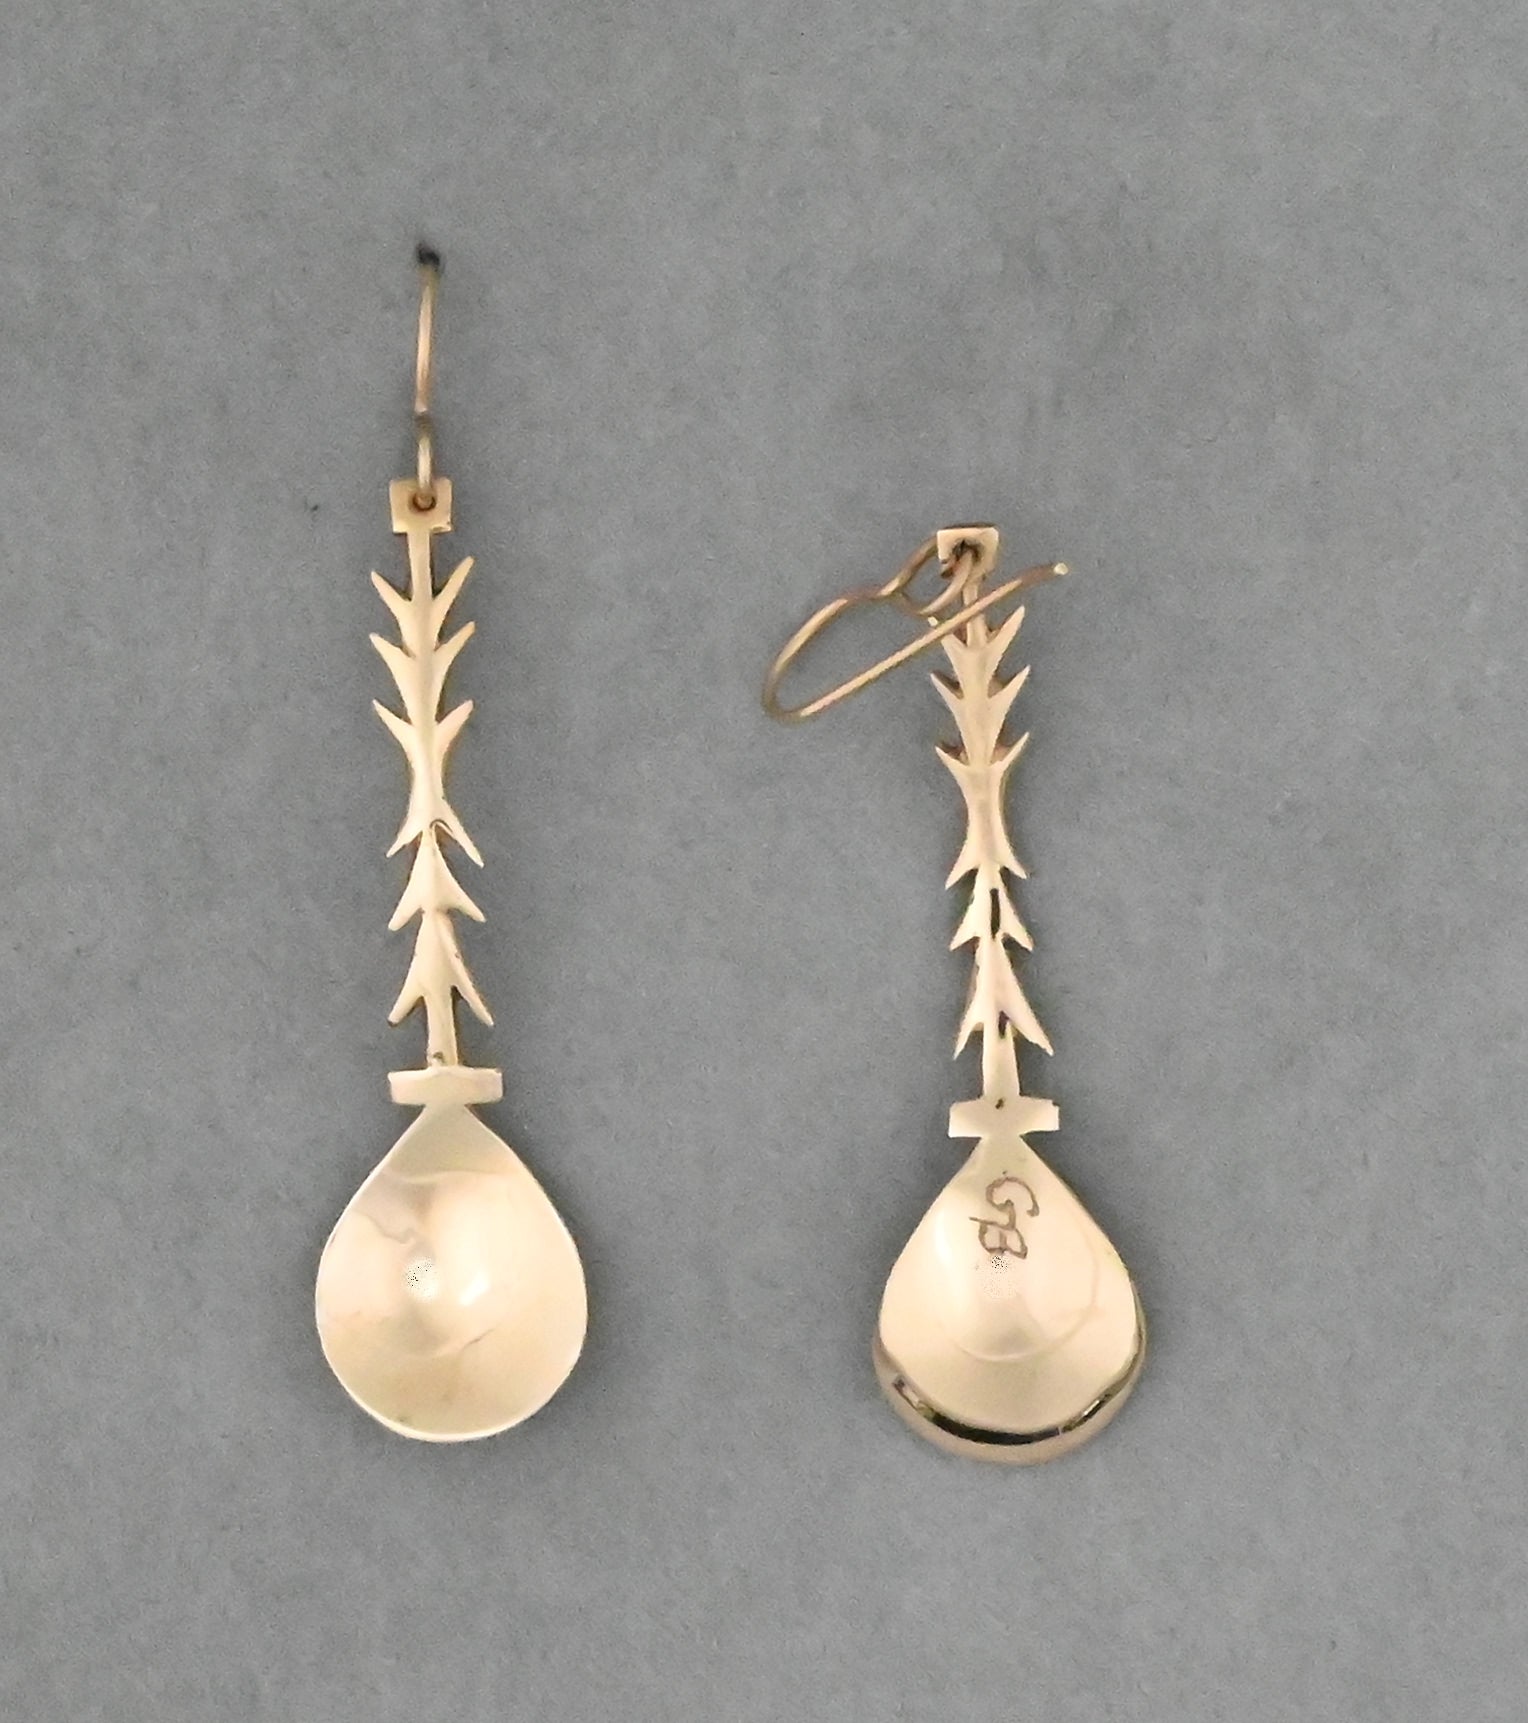 Earrings with Ceremonial Spoons by George Blake